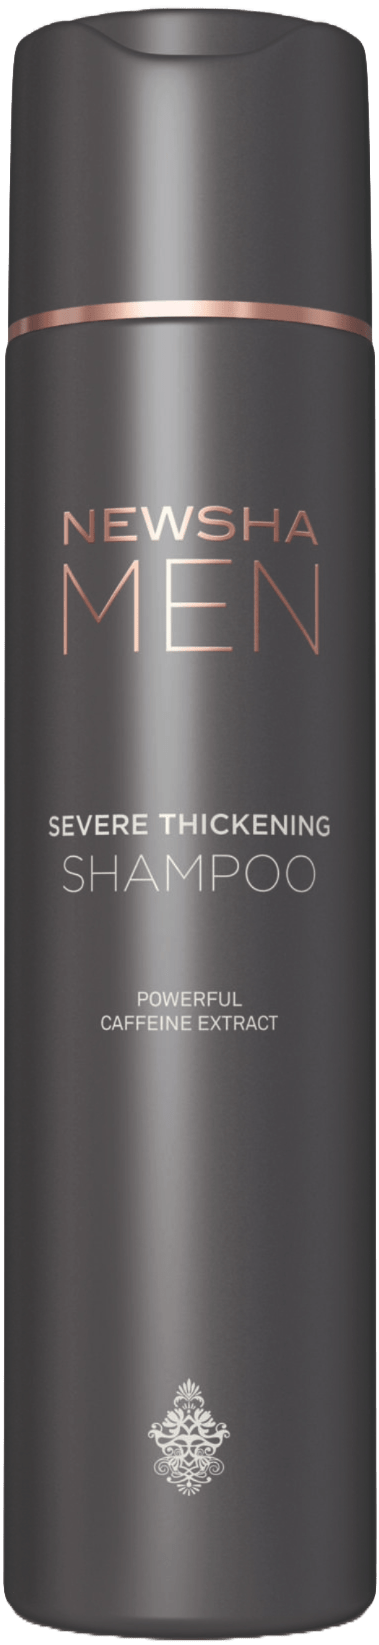 Severe Thickening Shampoo